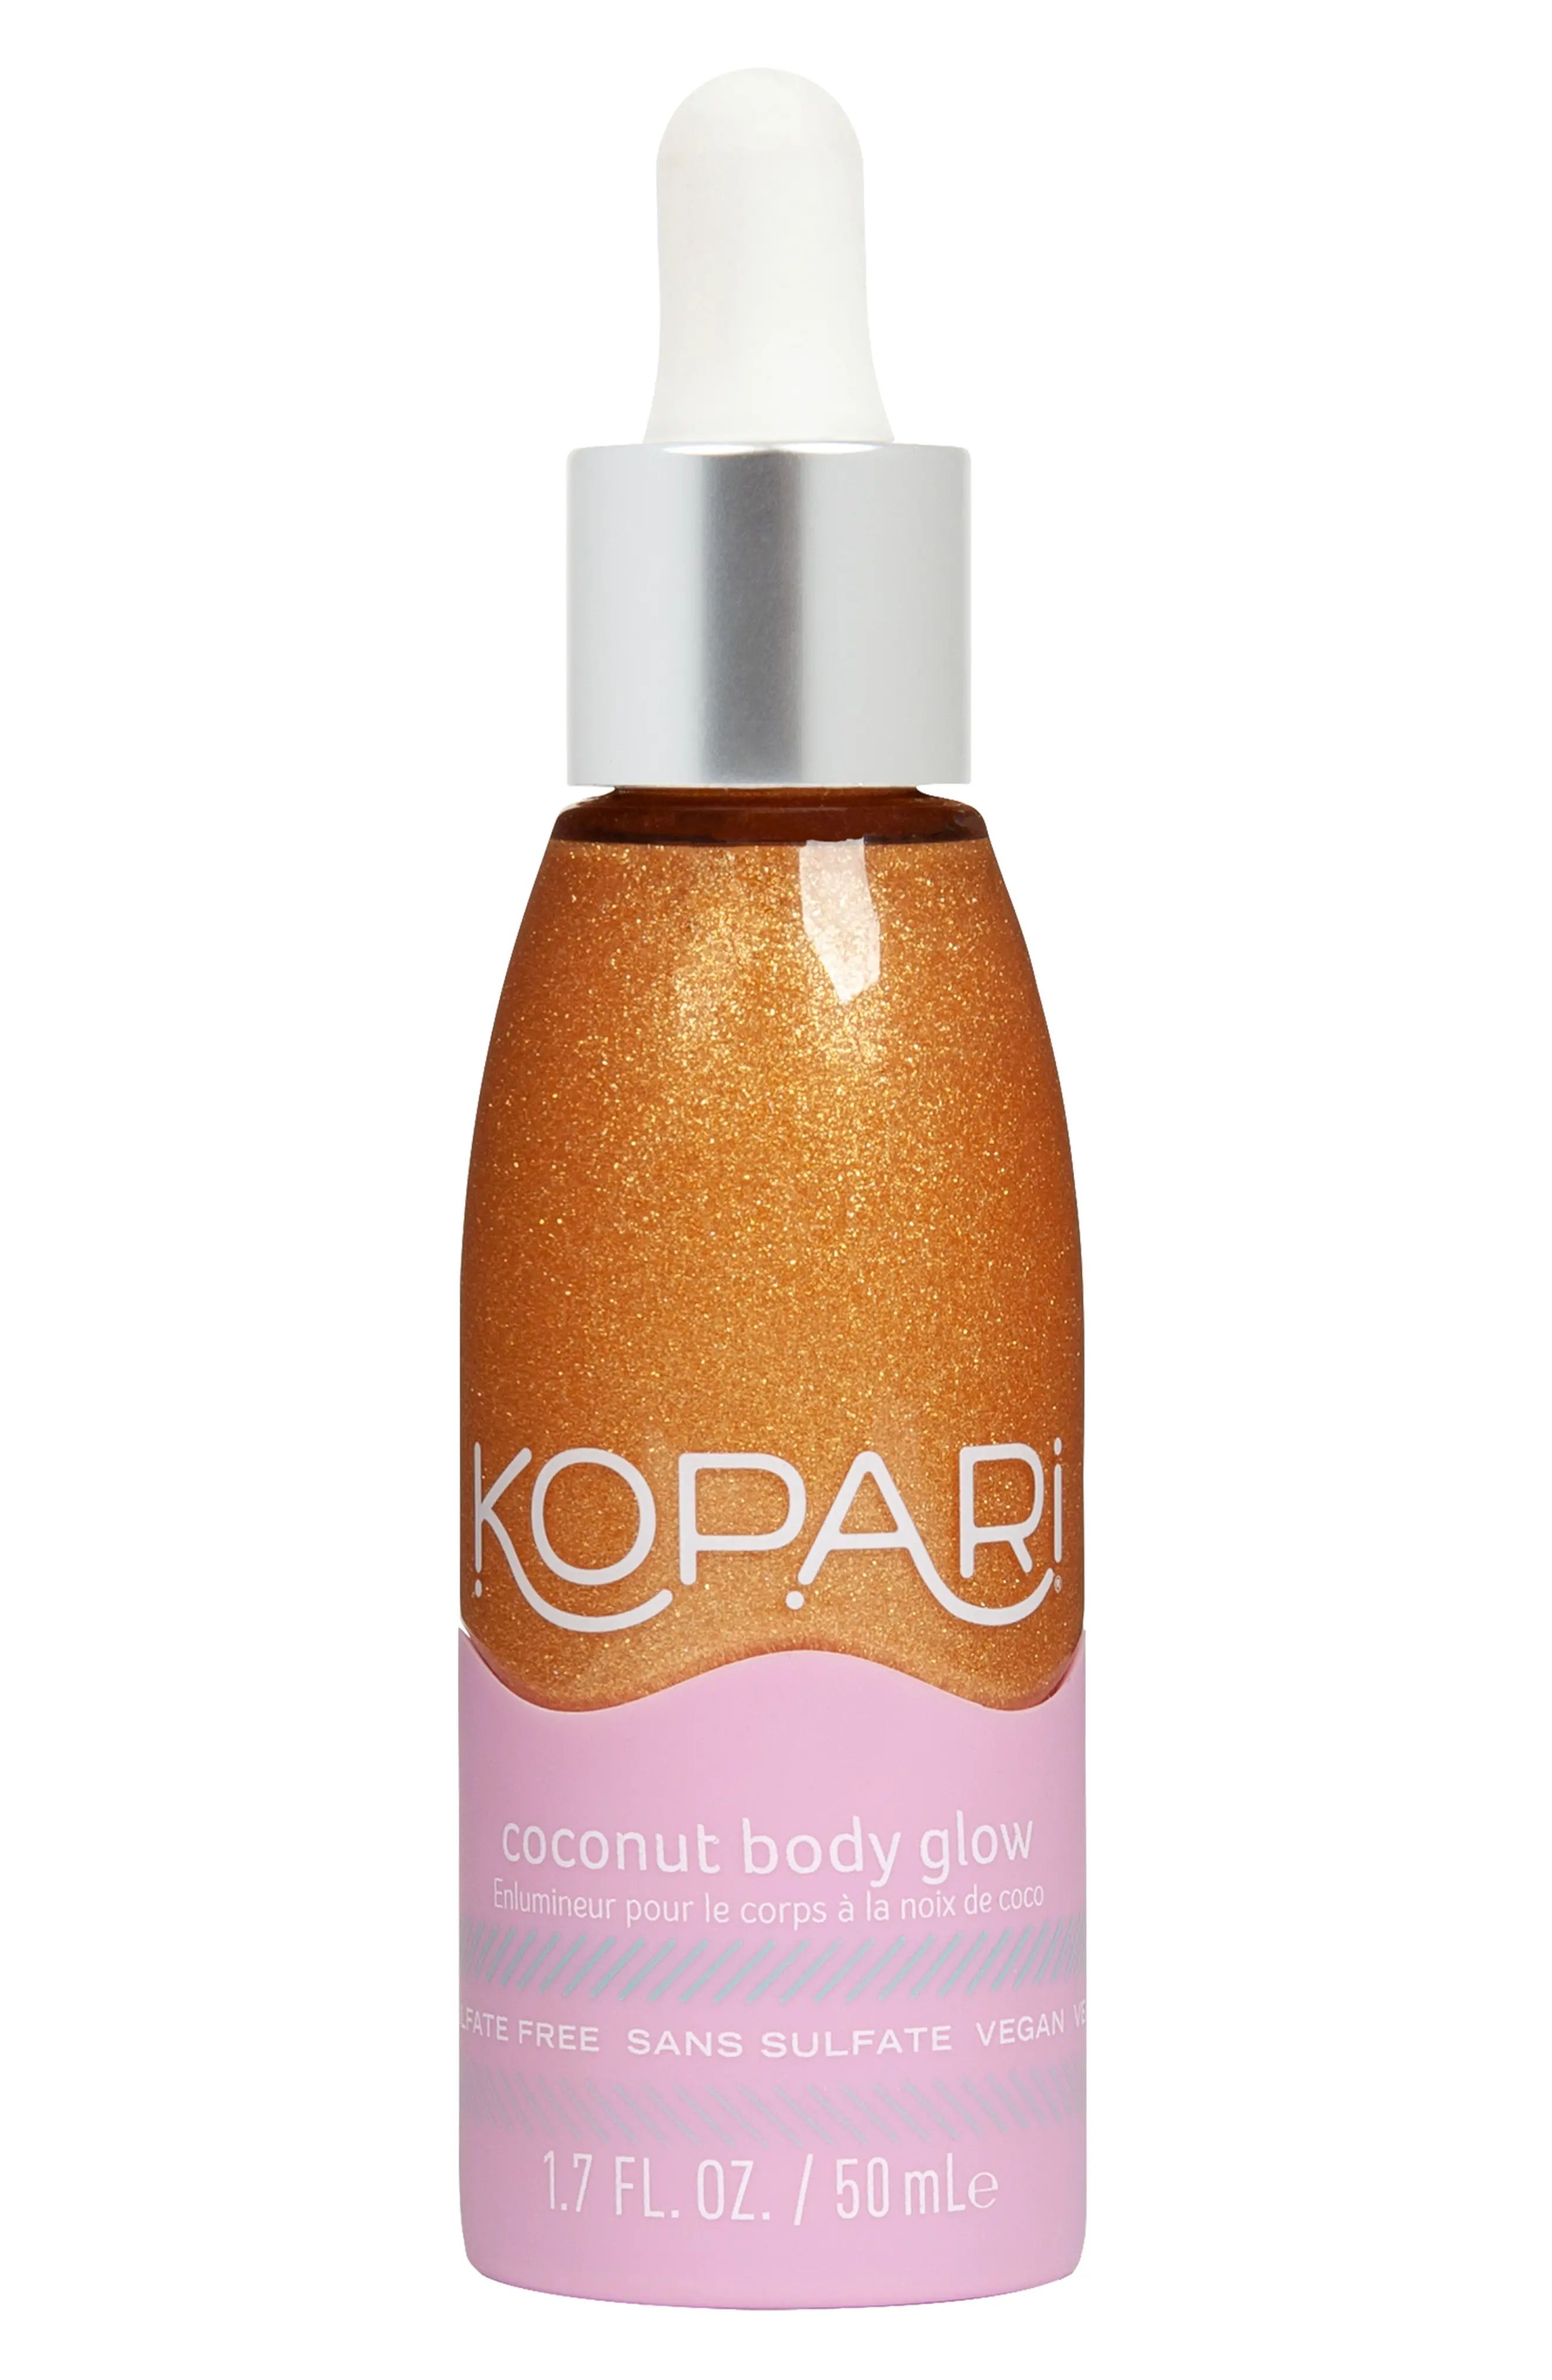 Kopari Coconut Body Glow, Size 1.7 oz | Nordstrom